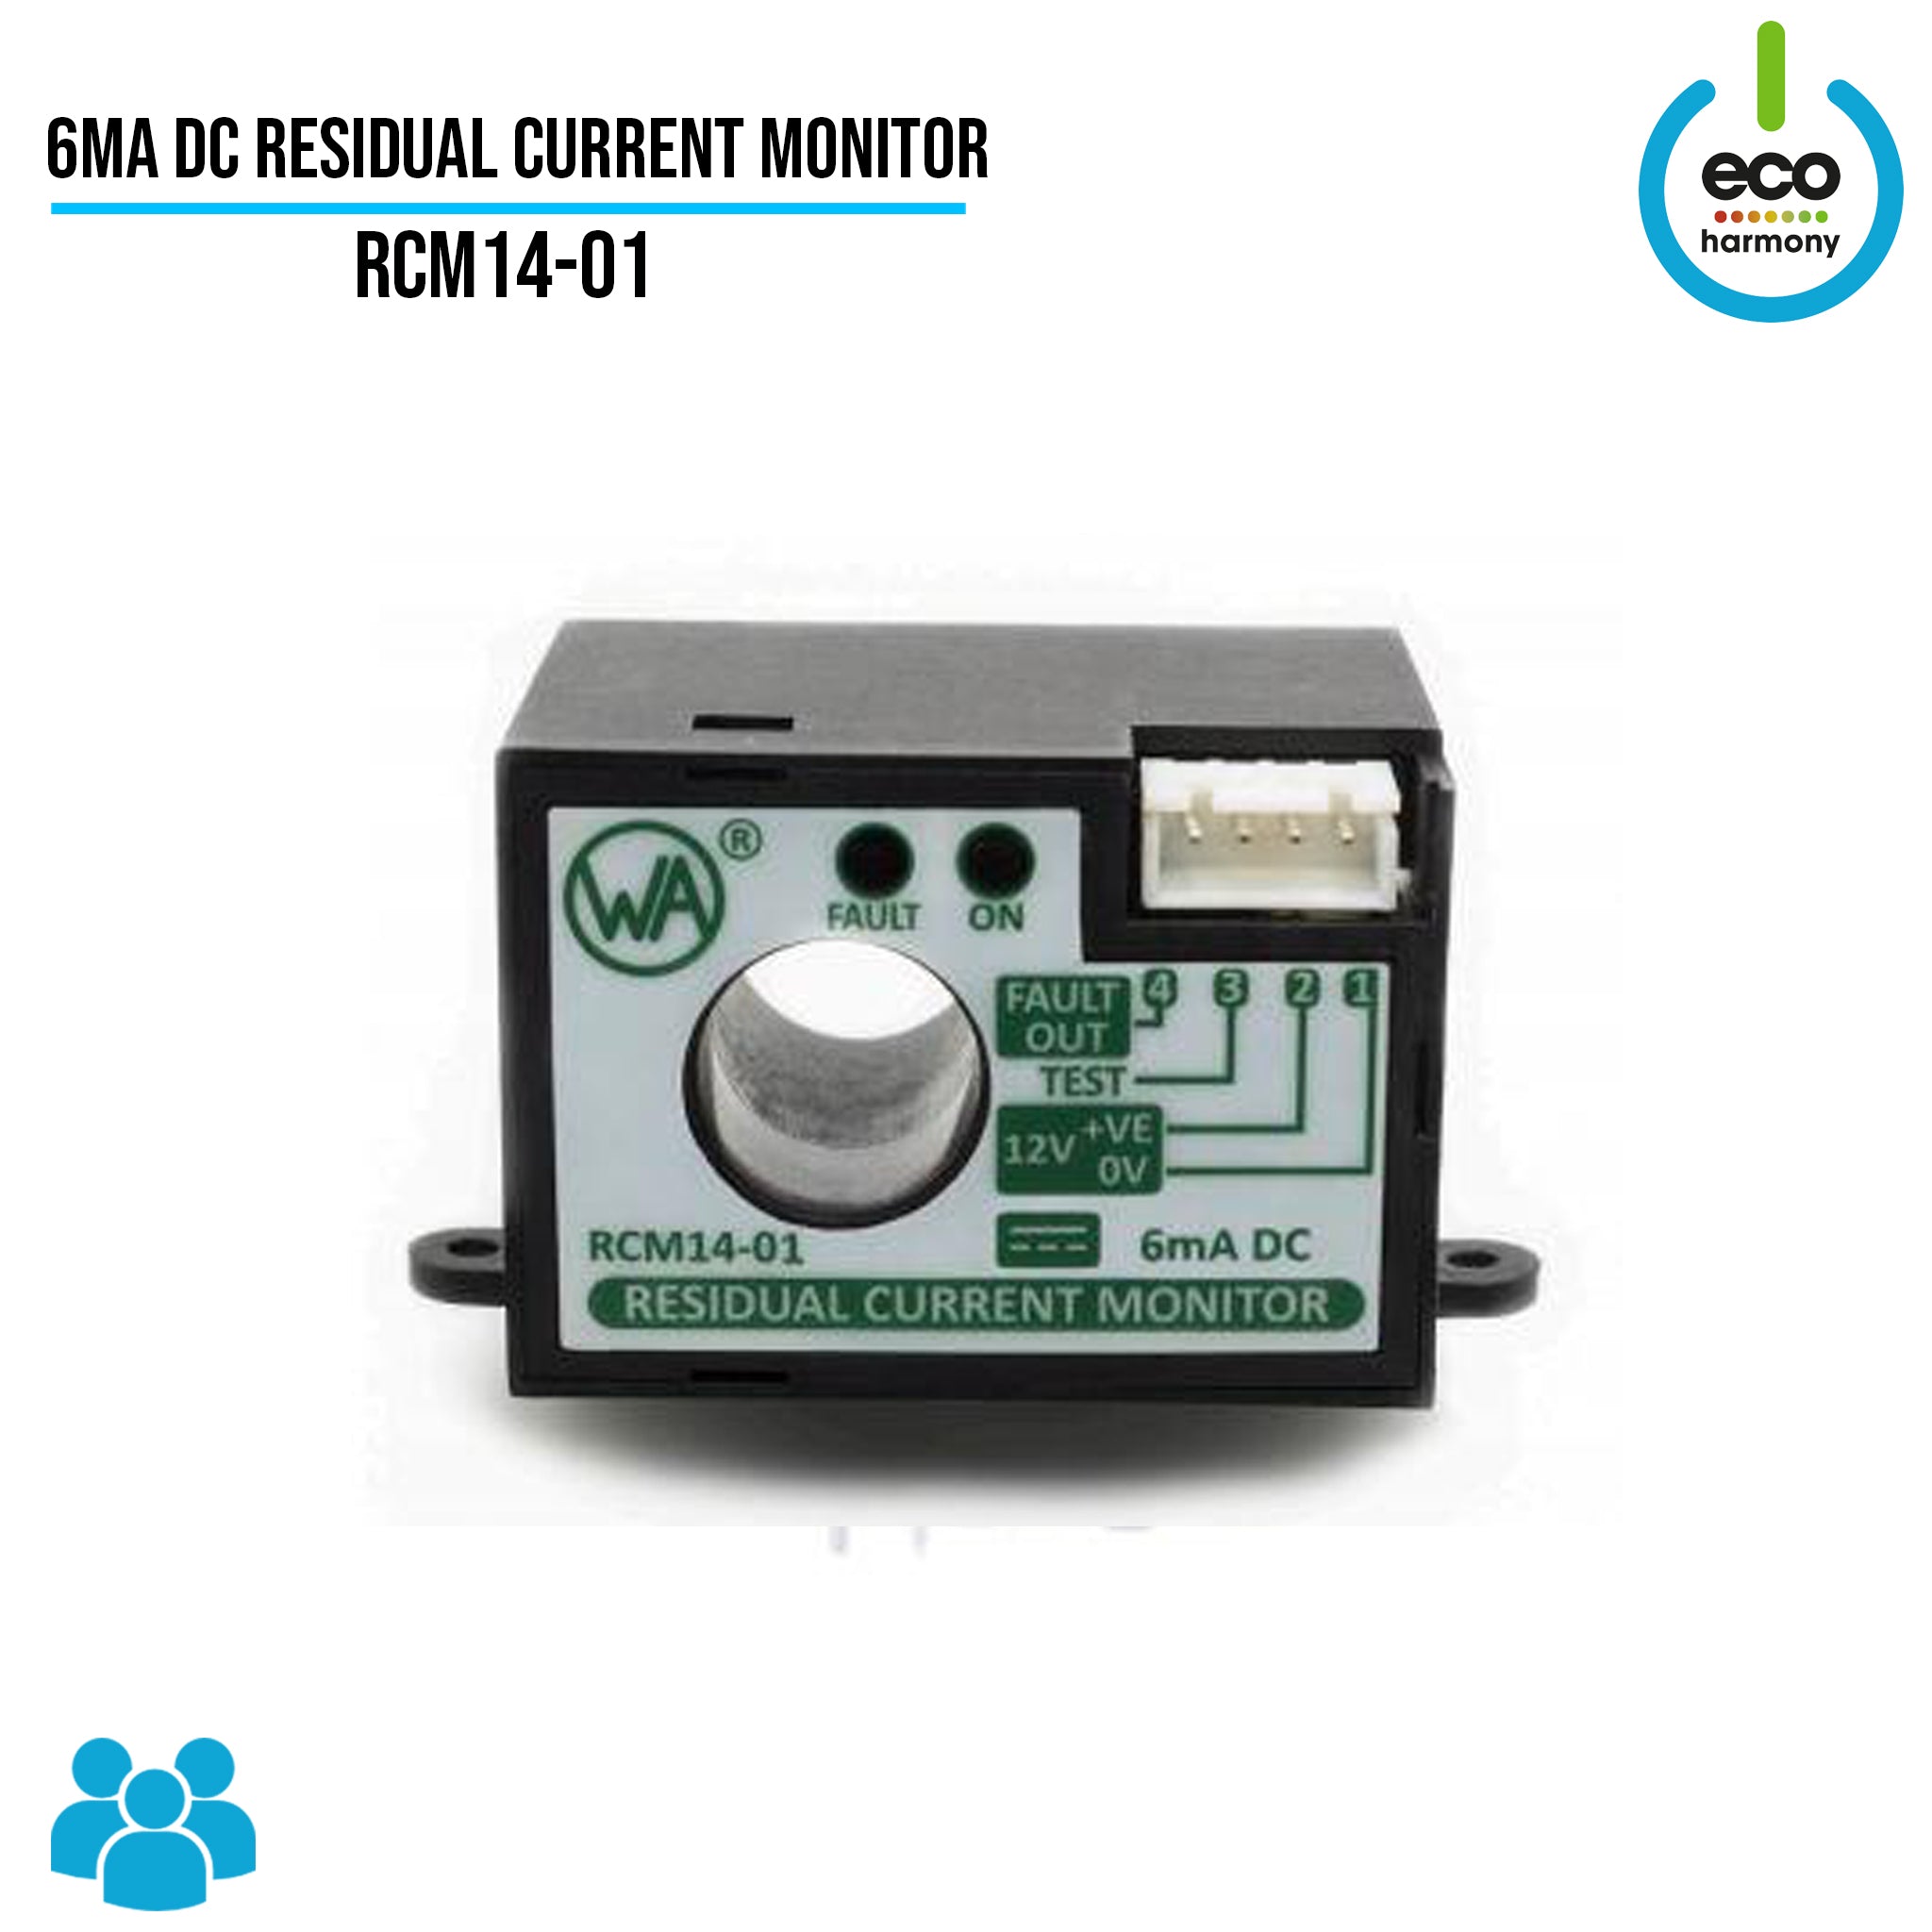 6mA DC Residual Current Monitor - RCM14-01